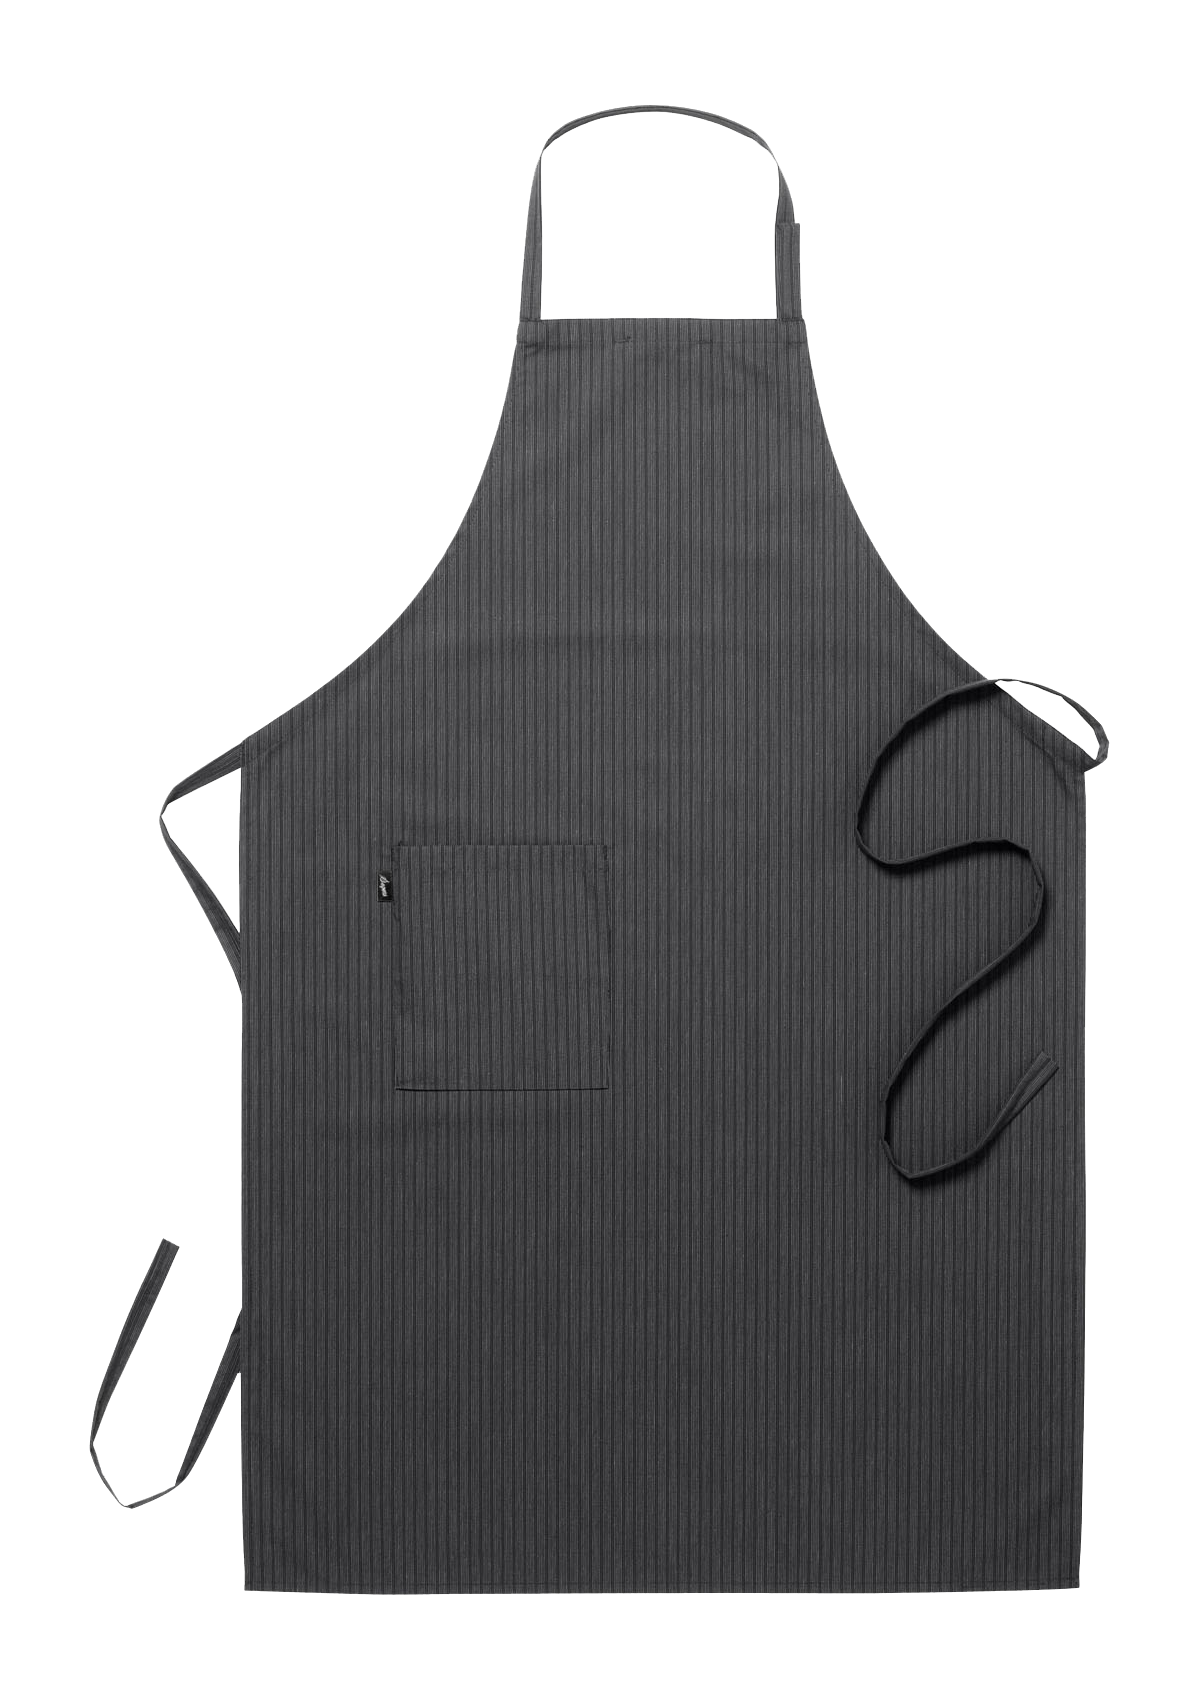 Bib apron With Adjustable Neck Strap